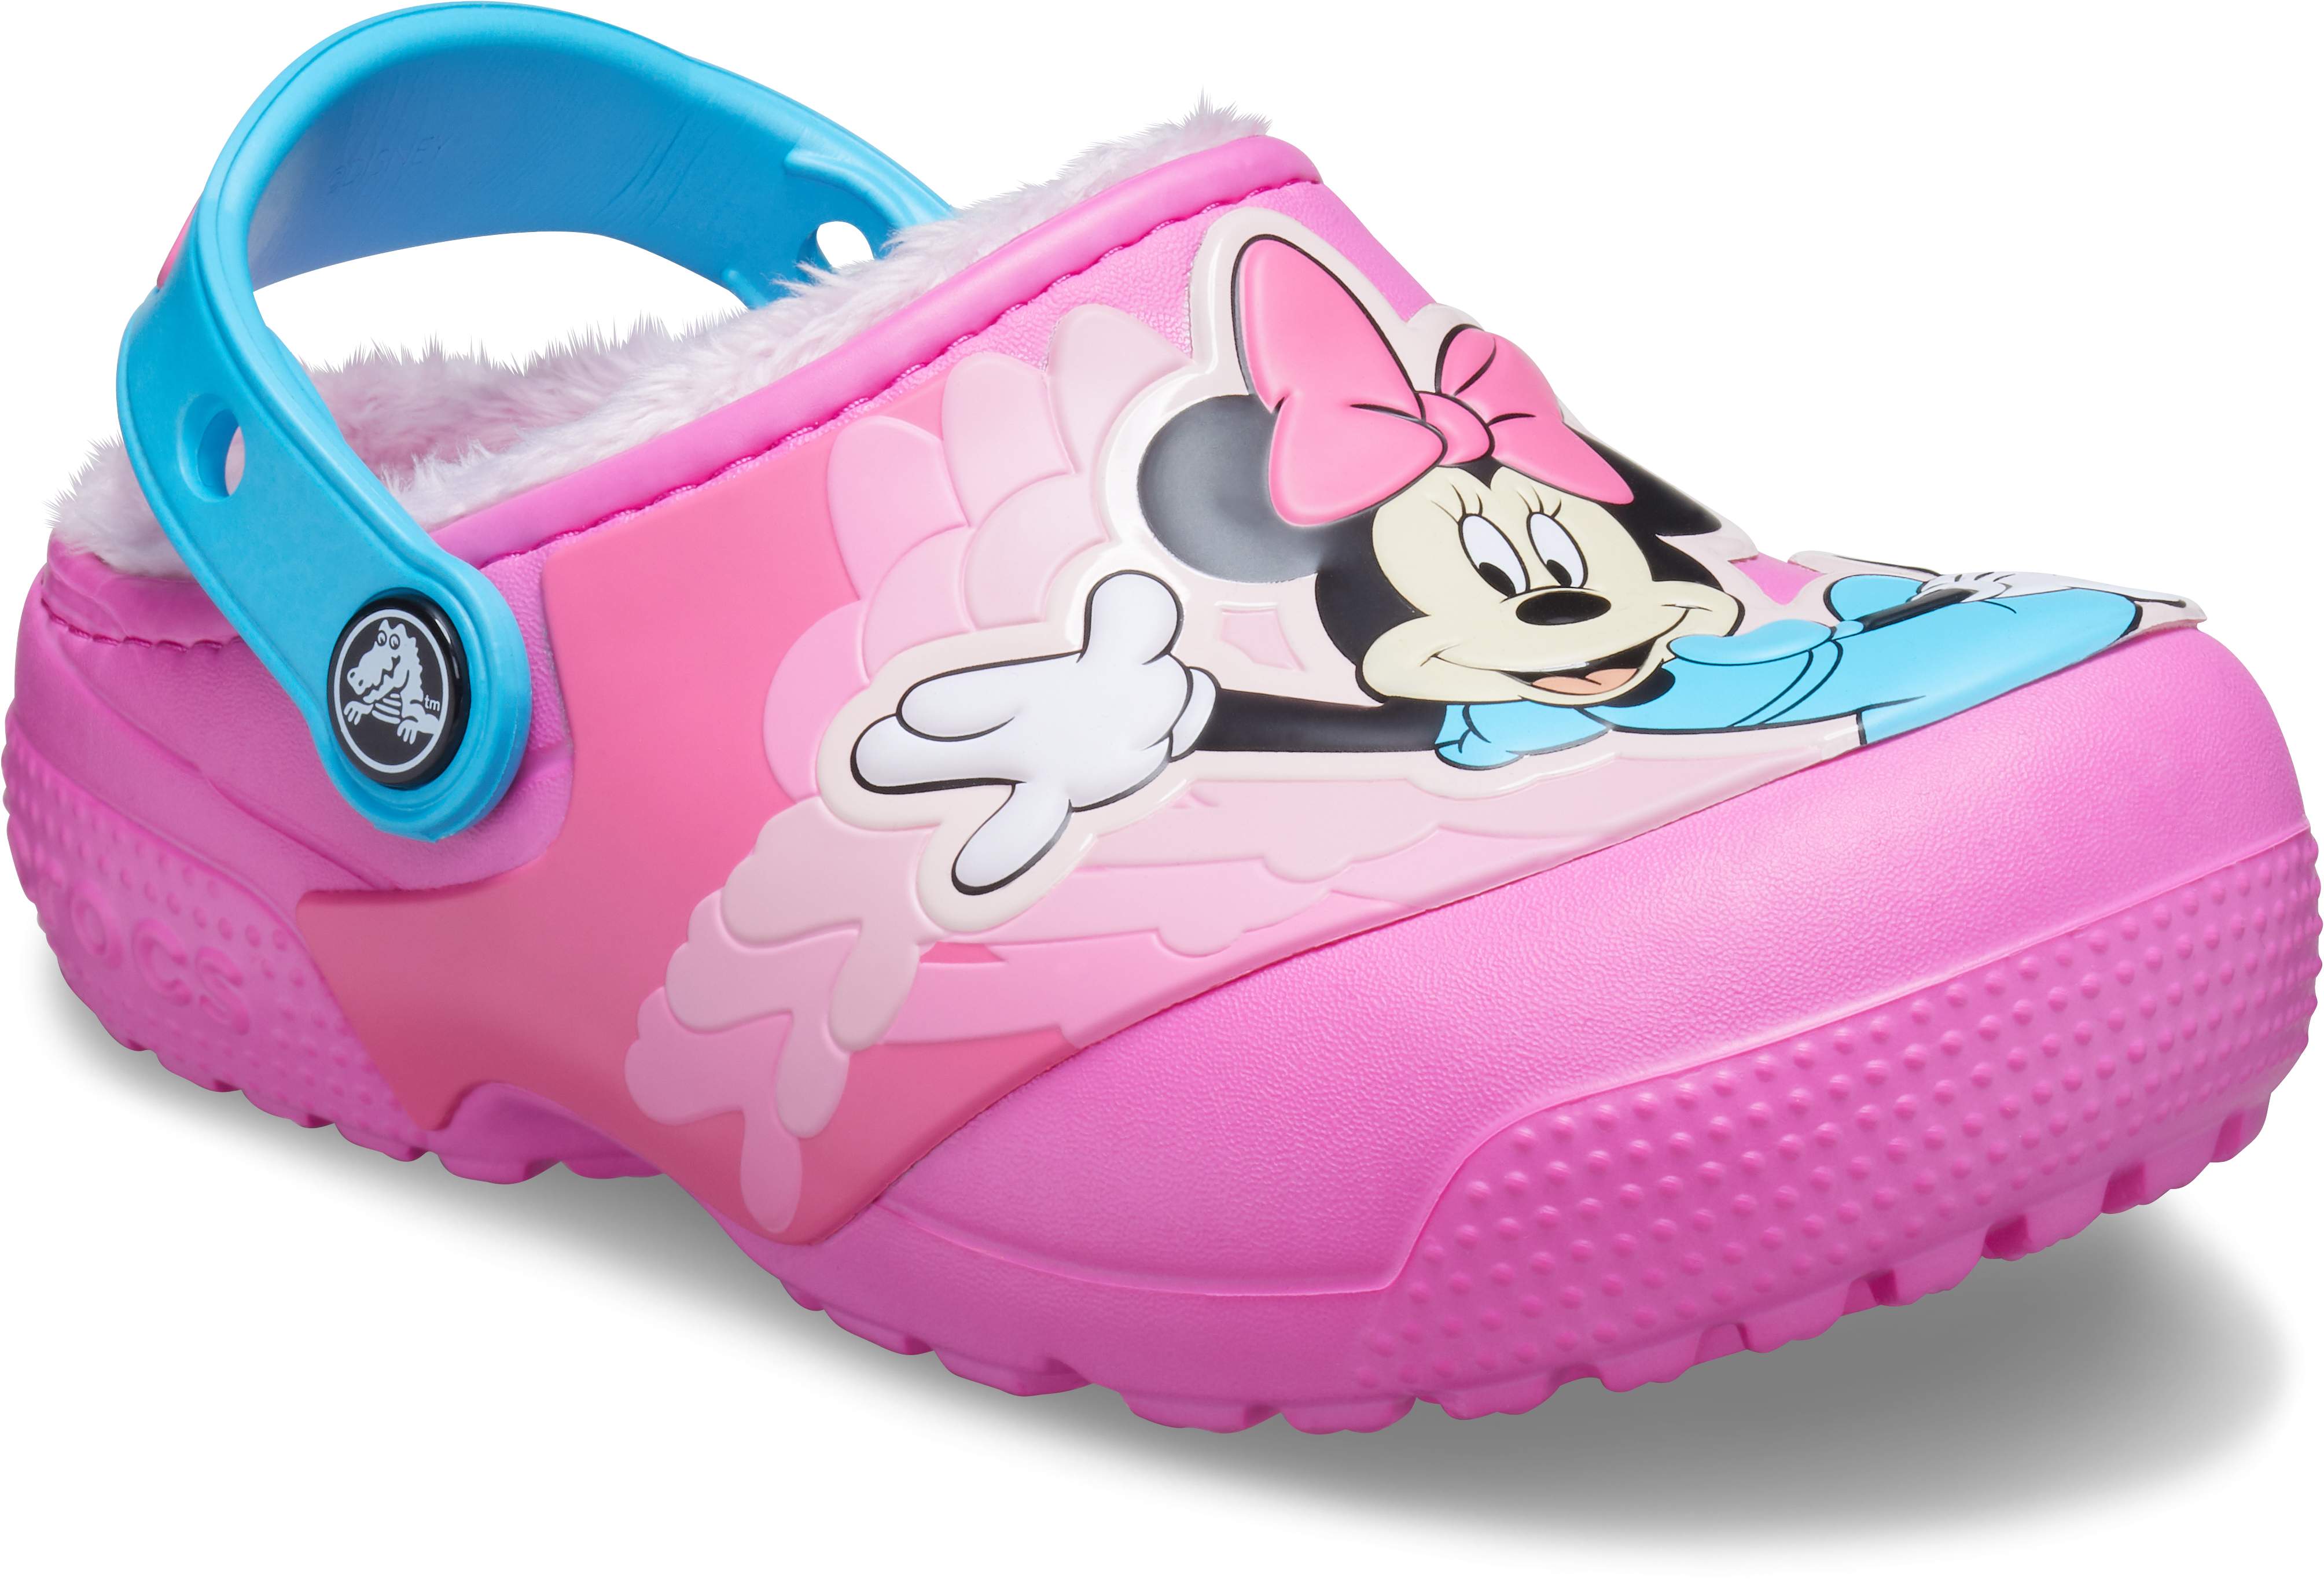 pink minnie mouse crocs